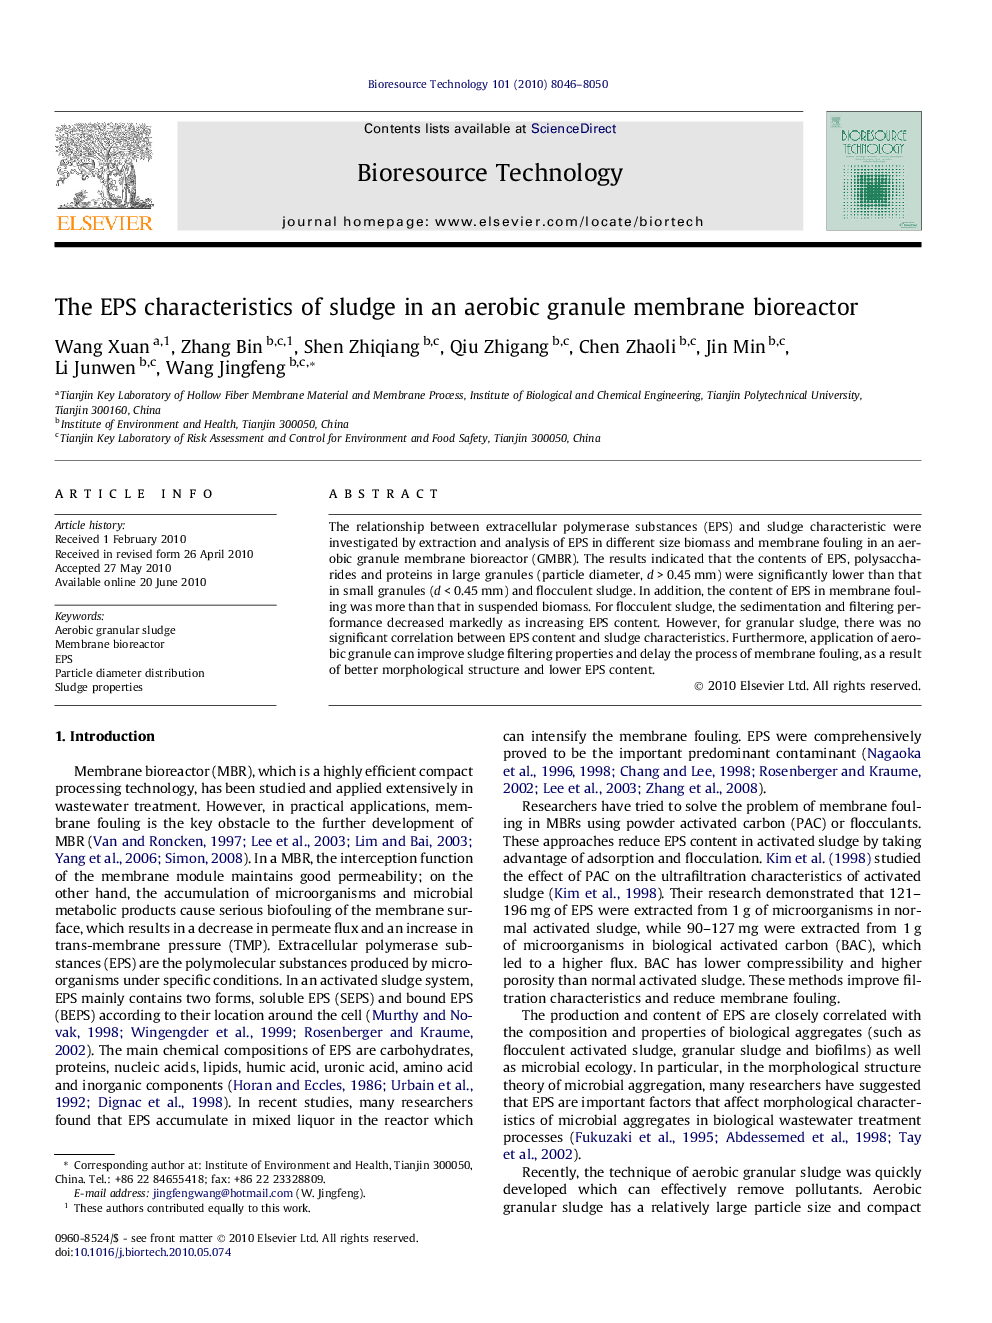 The EPS characteristics of sludge in an aerobic granule membrane bioreactor